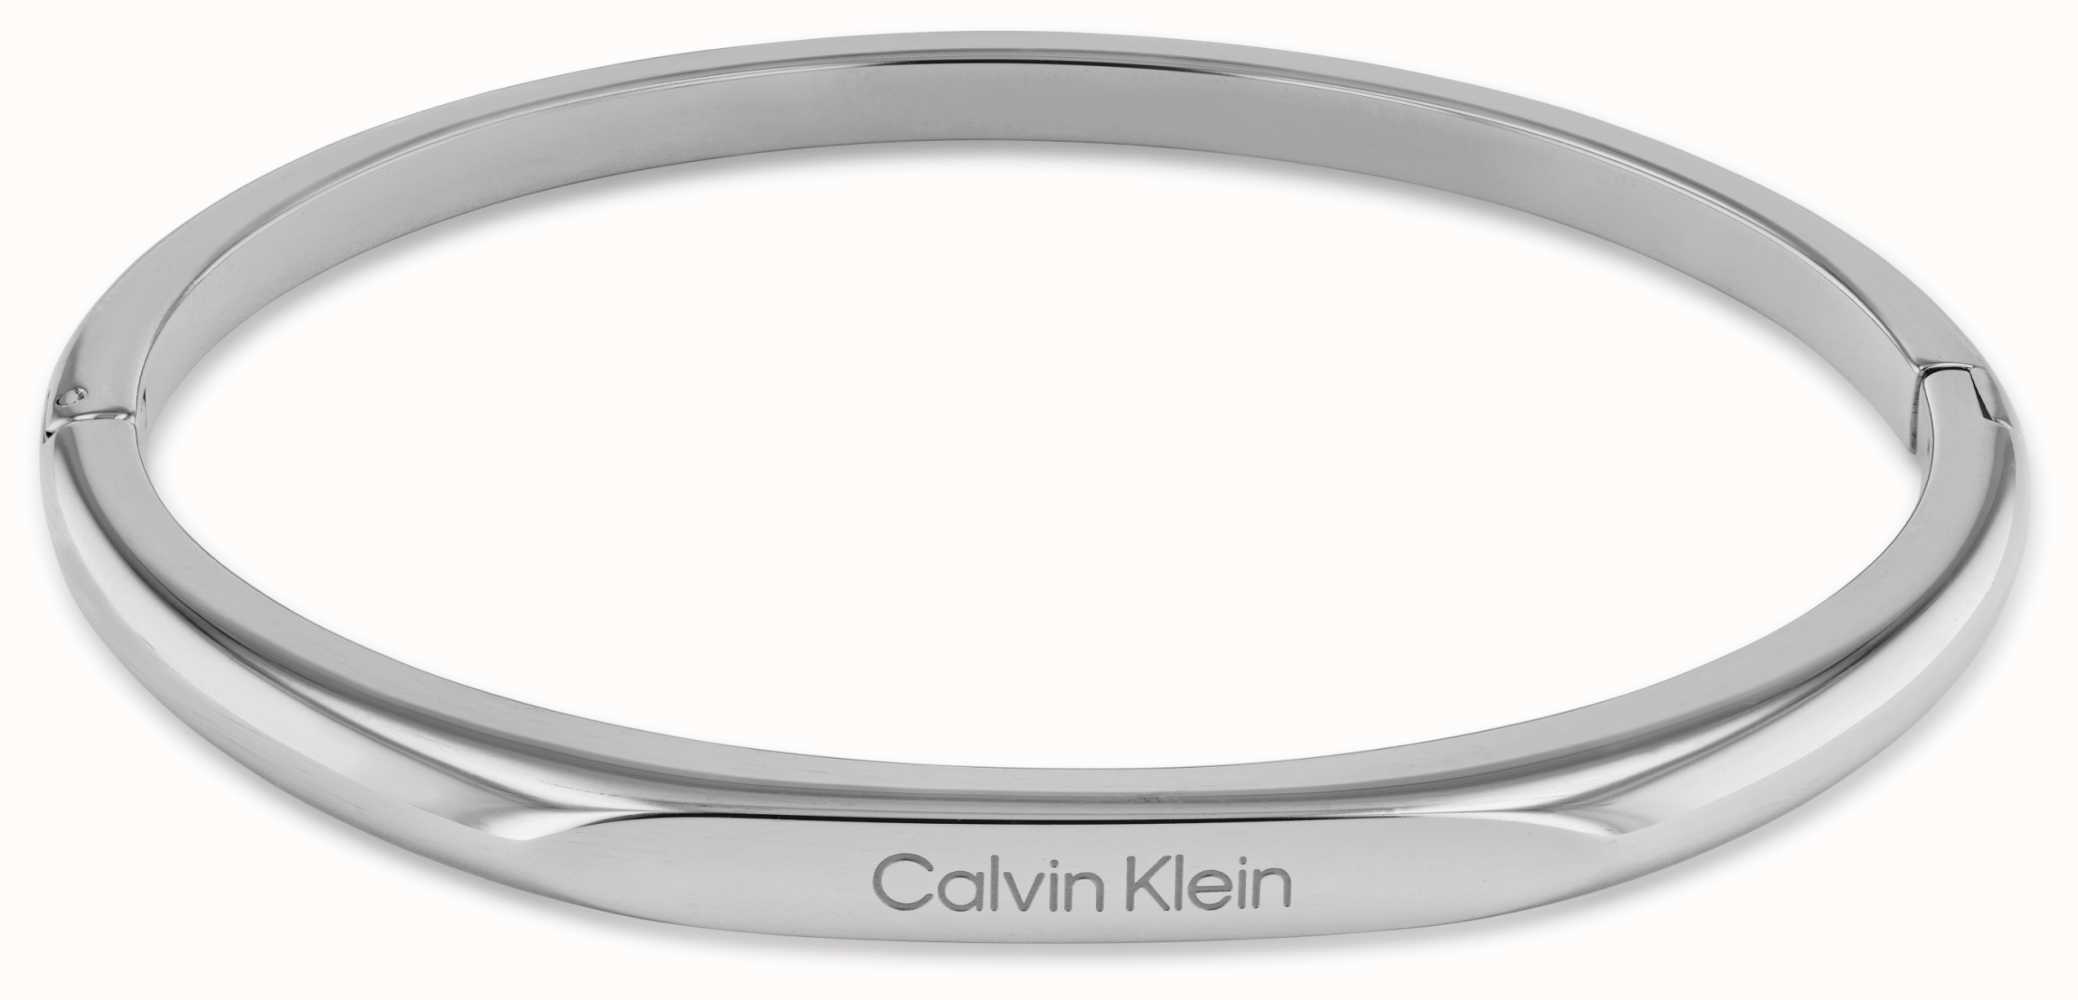 Shop BrandAlley Calvin Klein Women's Bracelets up to 75% Off | DealDoodle